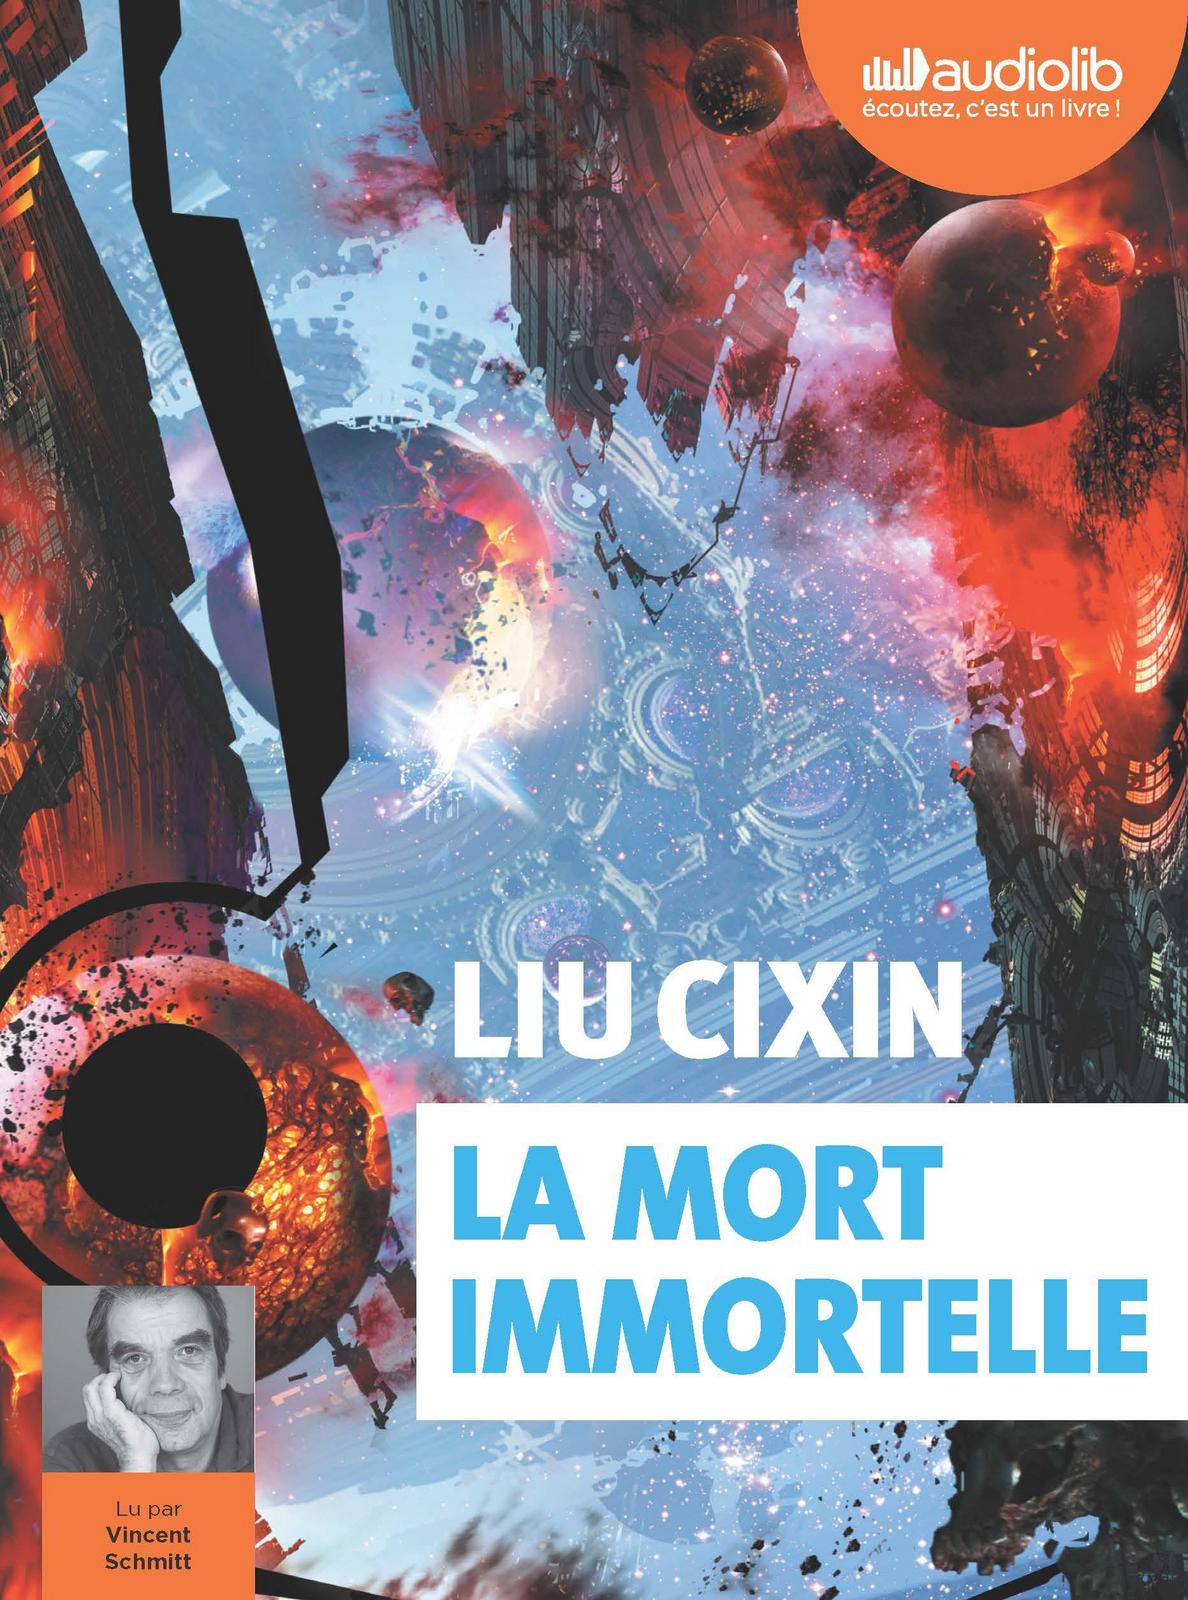 La mort immortelle (French language, 2020)